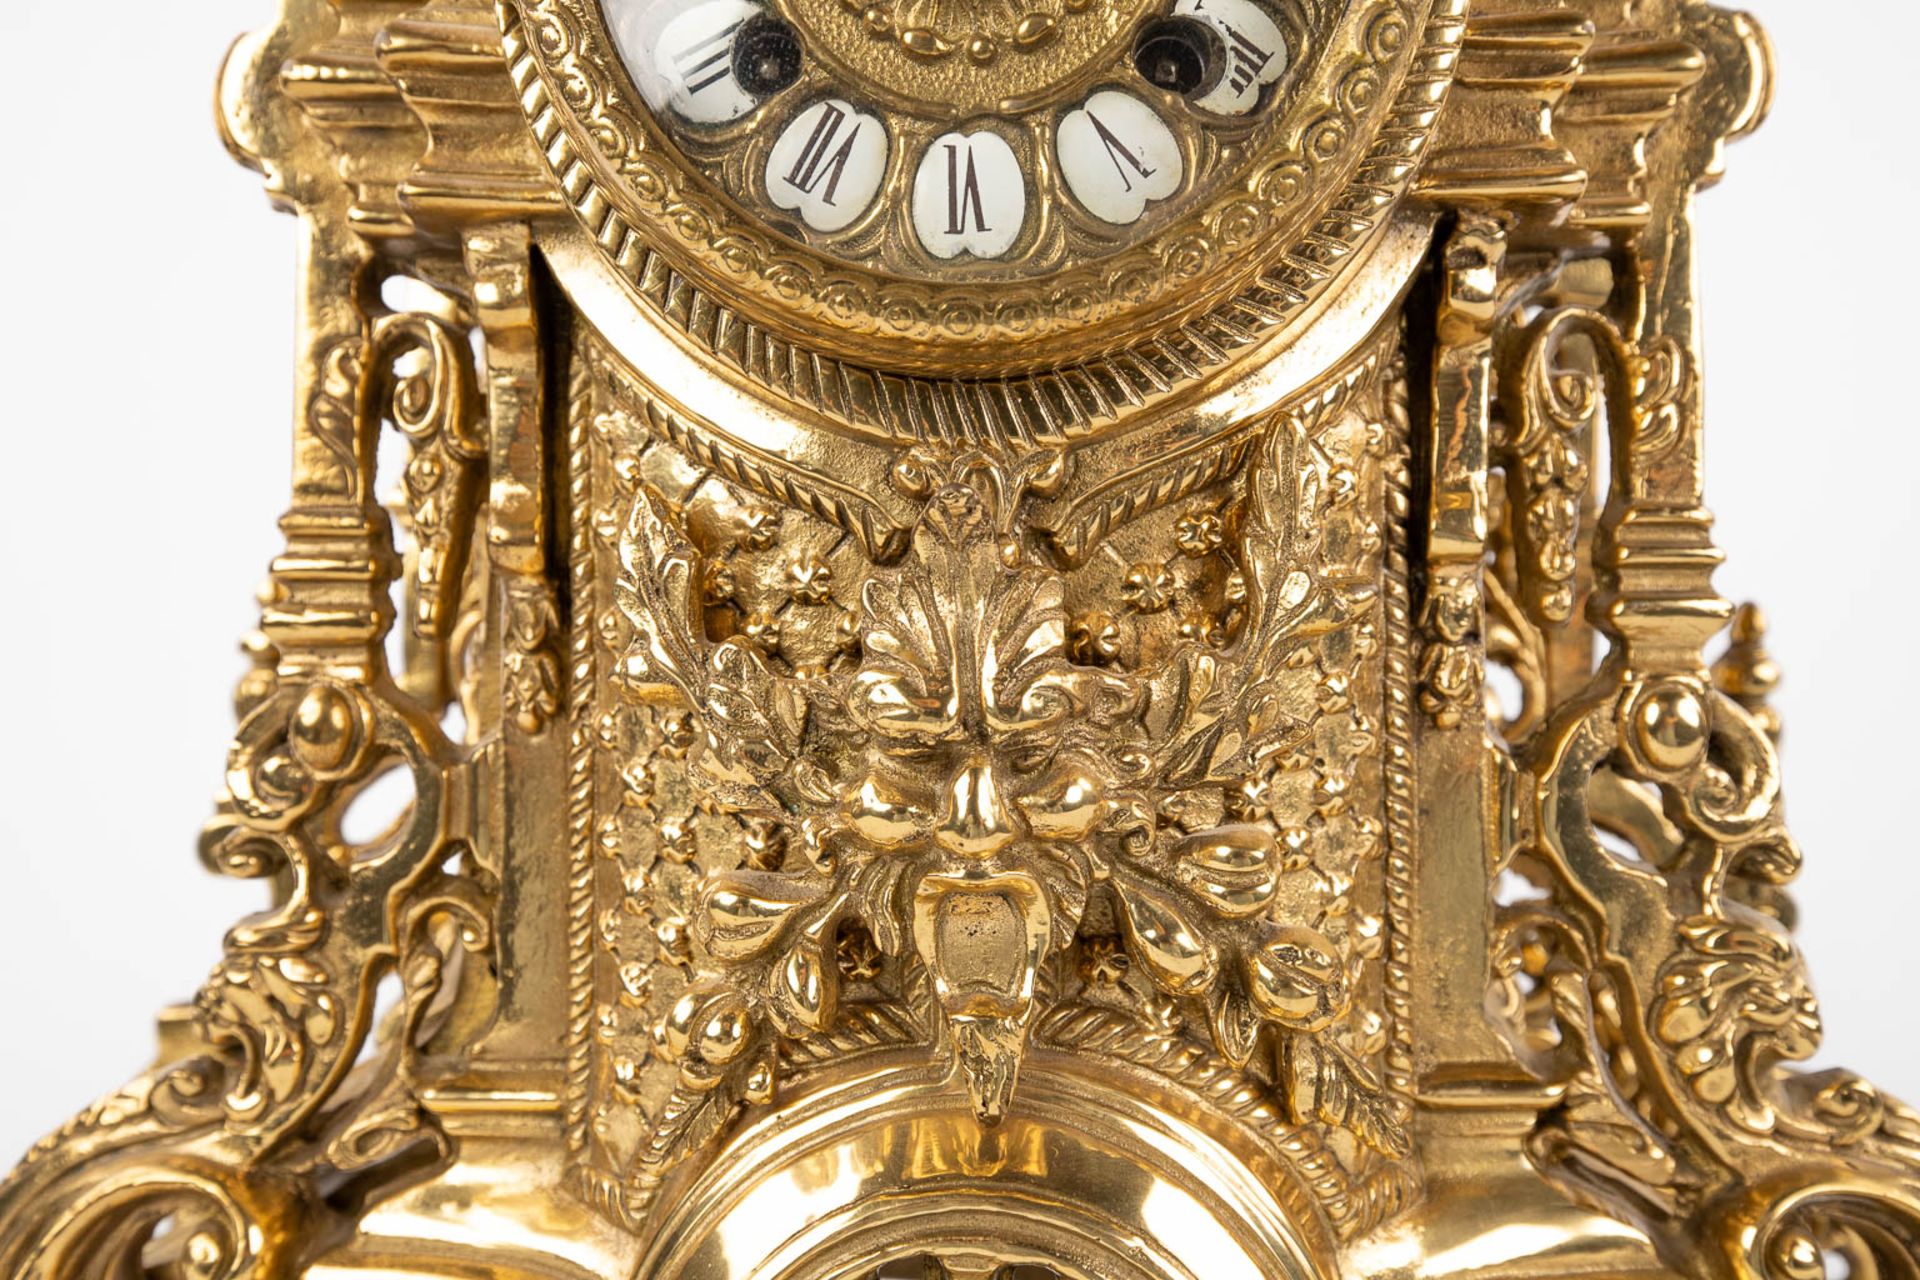 A three-piece mantle garniture clock and candelabra, bronze. 20th C. (D:16 x W:35 x H:62 cm) - Image 15 of 16